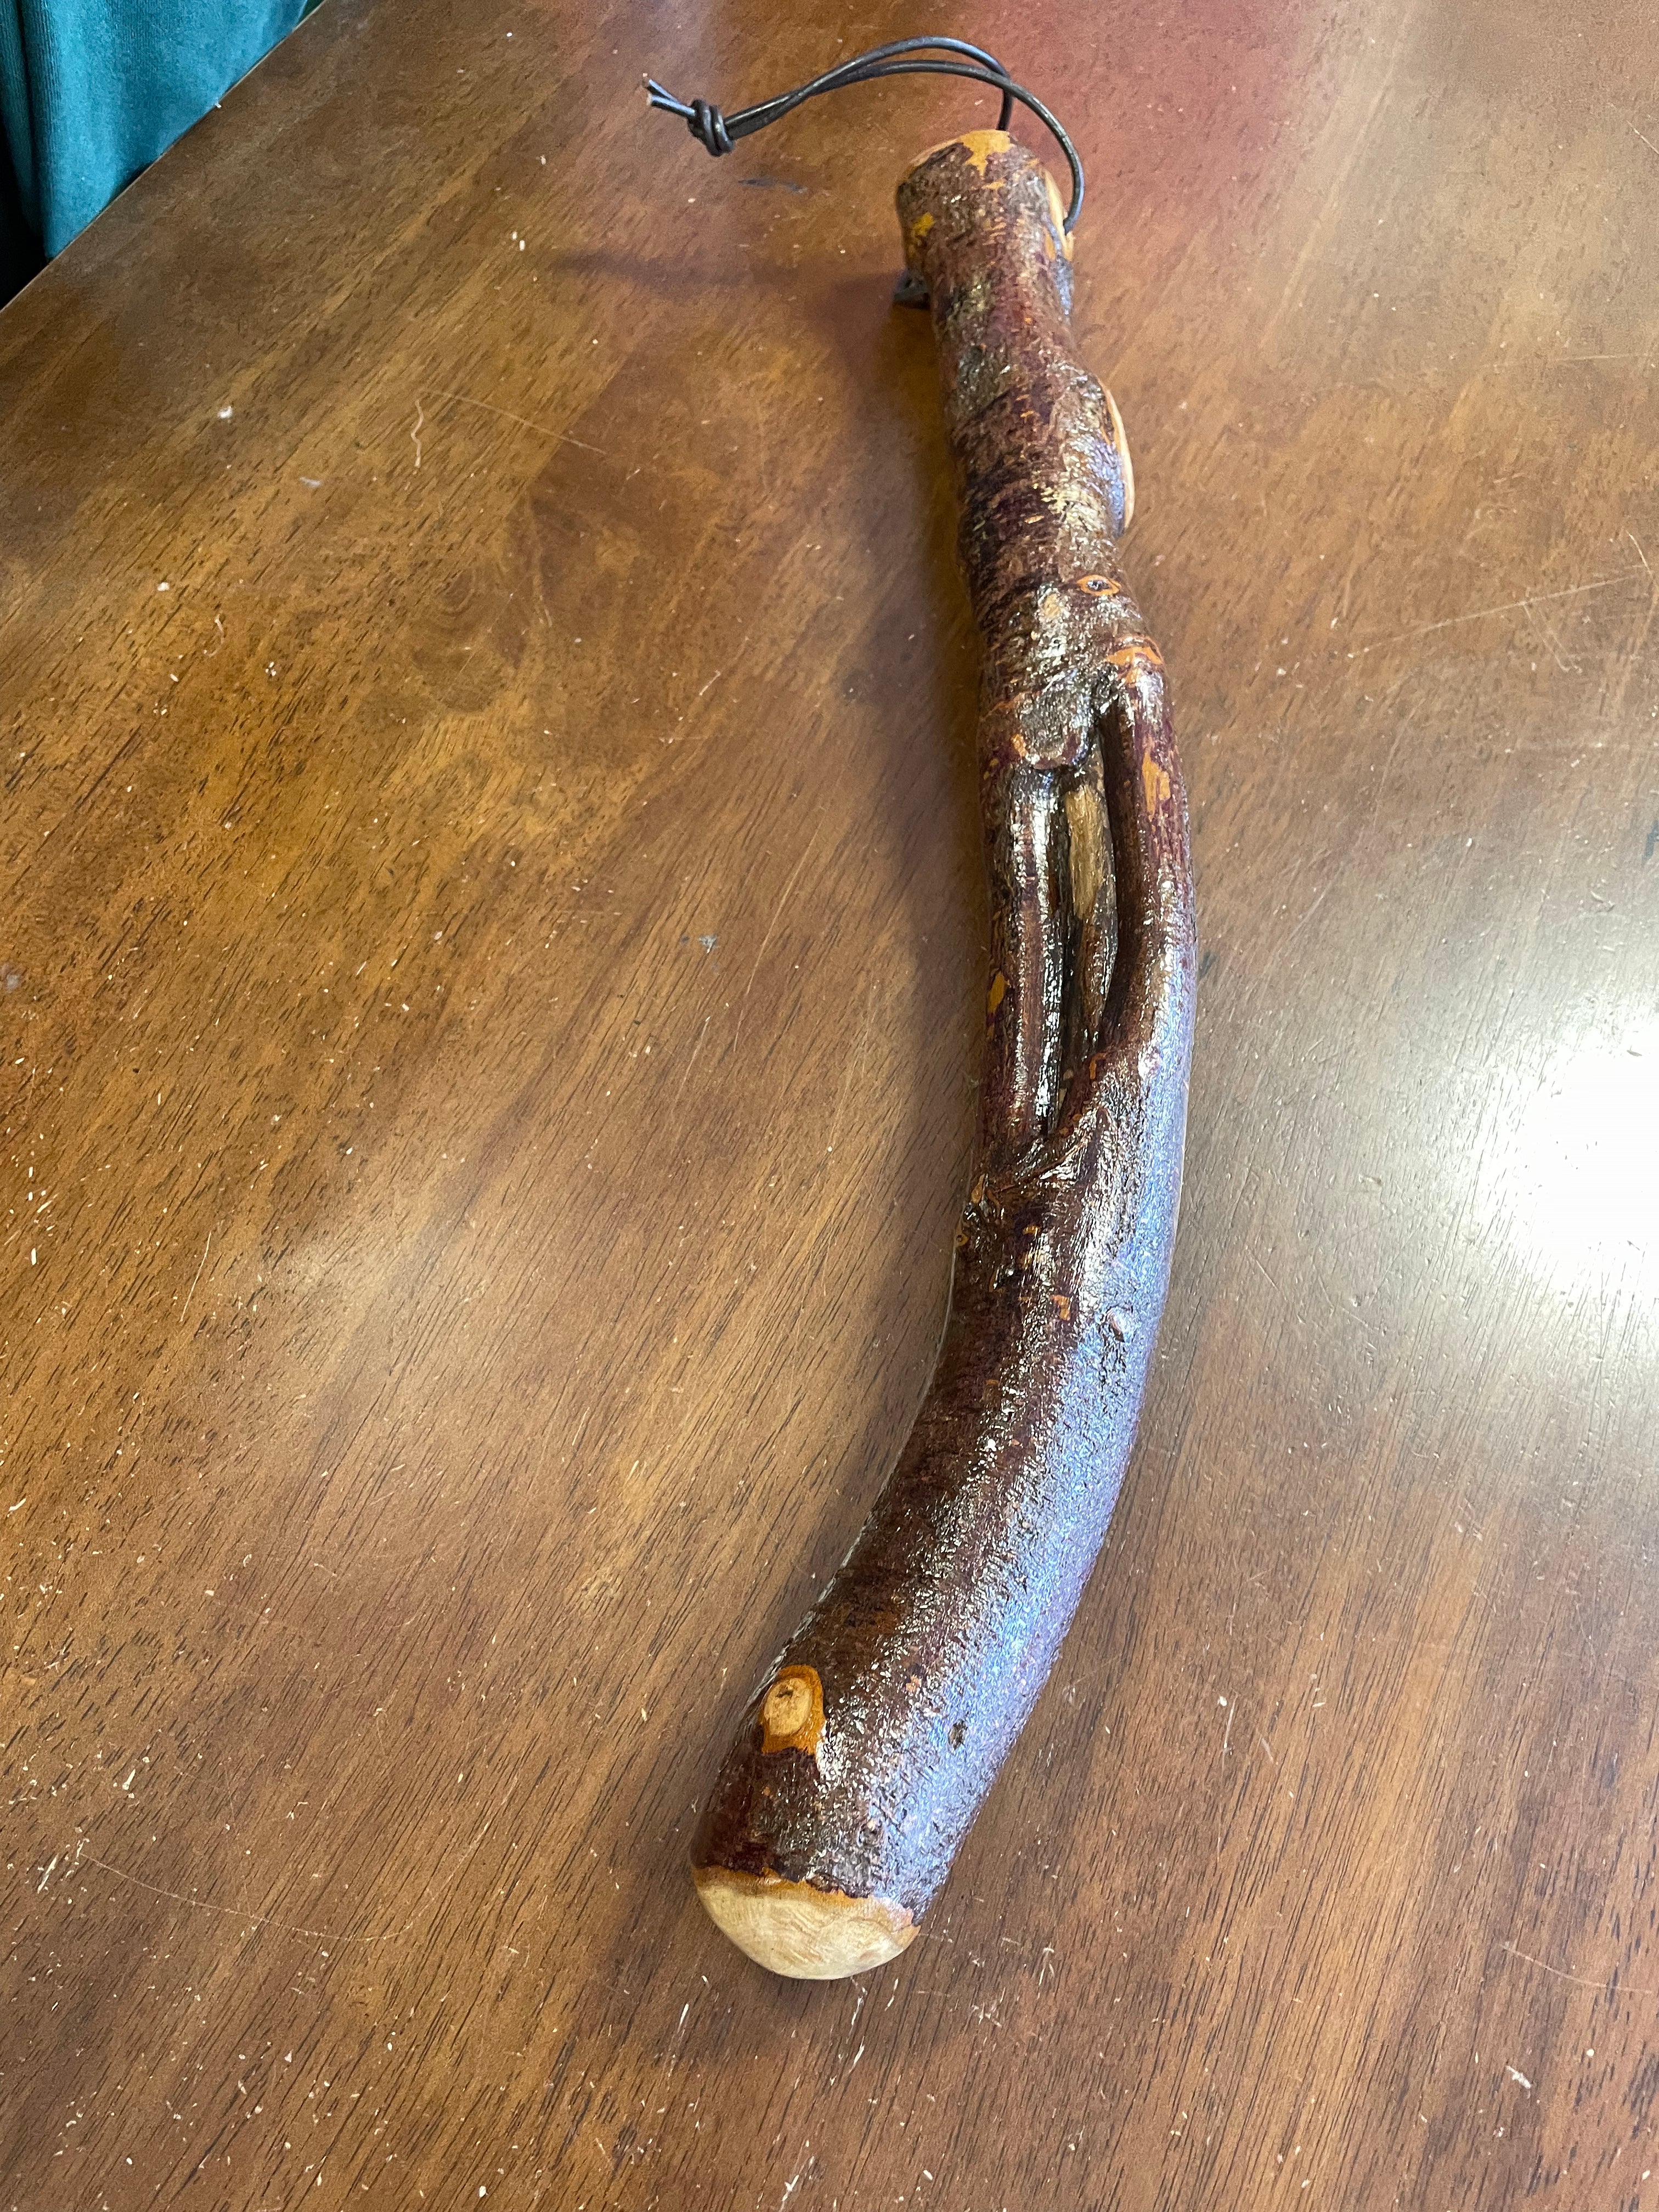 Blackthorn Shillelagh -18 1/4 inch - Handmade in Ireland